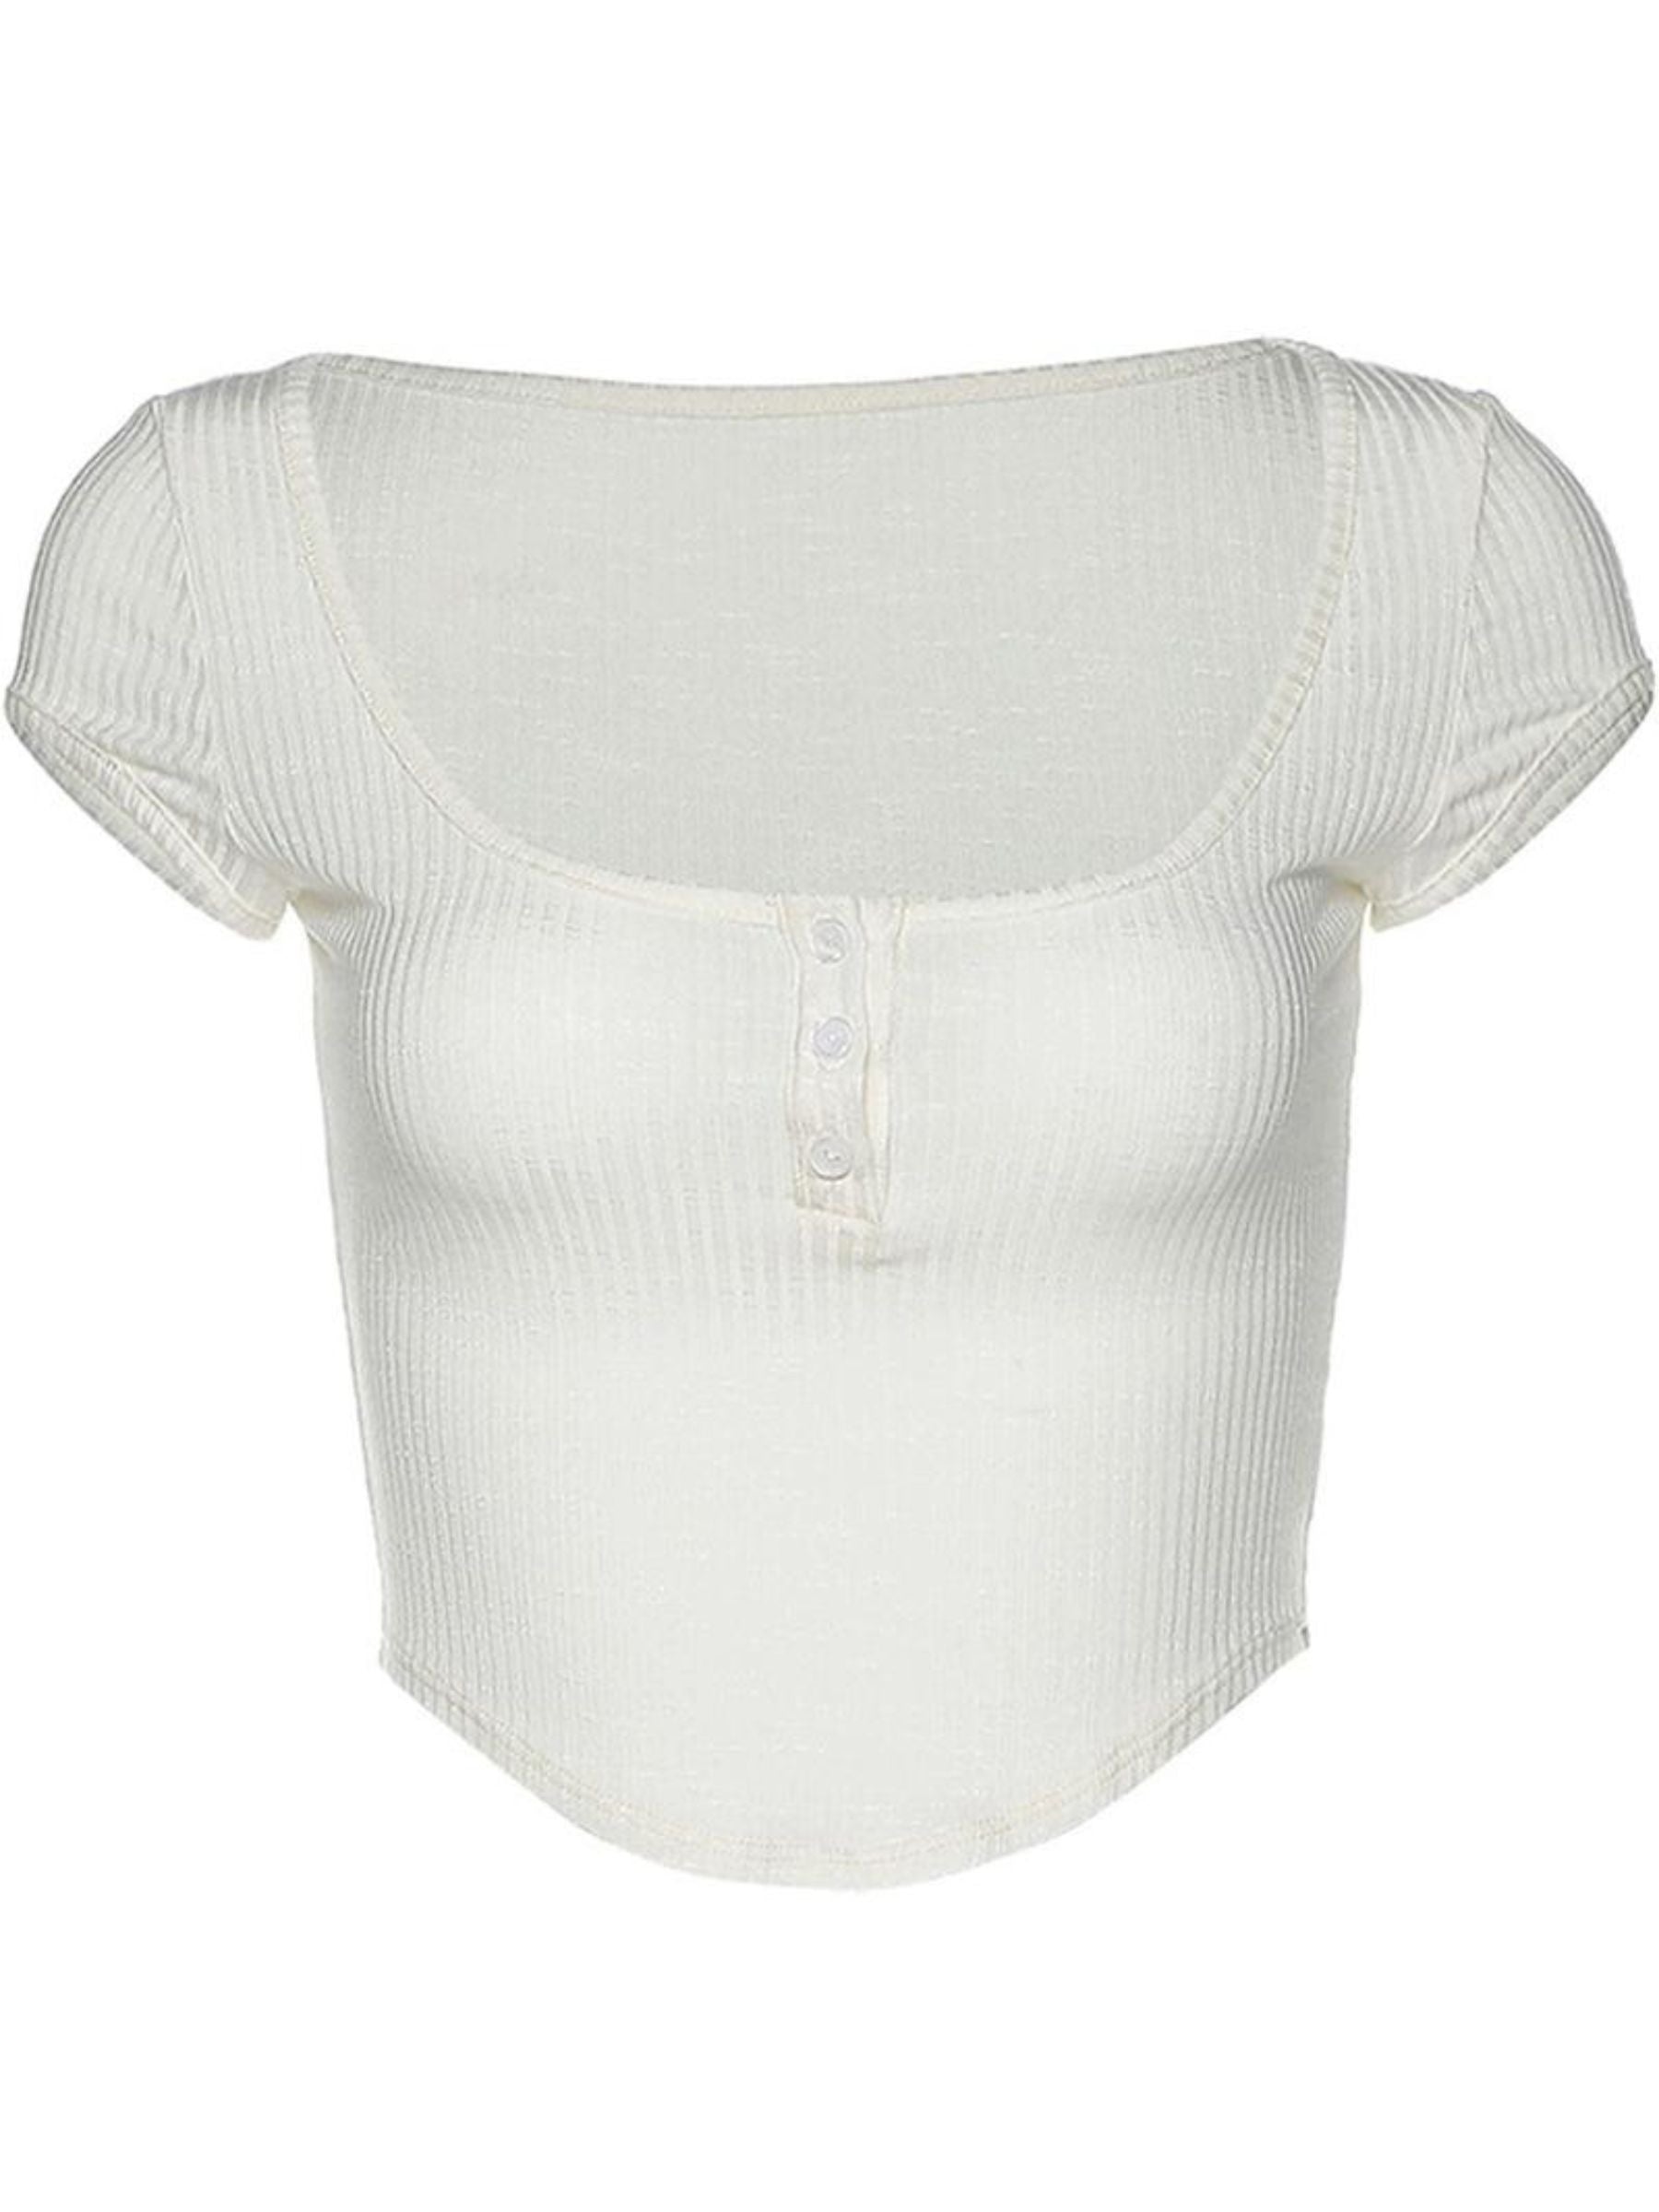 LaPose Fashion - Ofelia Short Sleeve Crop Top - Basic Tops, Casual Tops, Crop Tops, Sexy Tops, Short Sleeve Tops, Tops